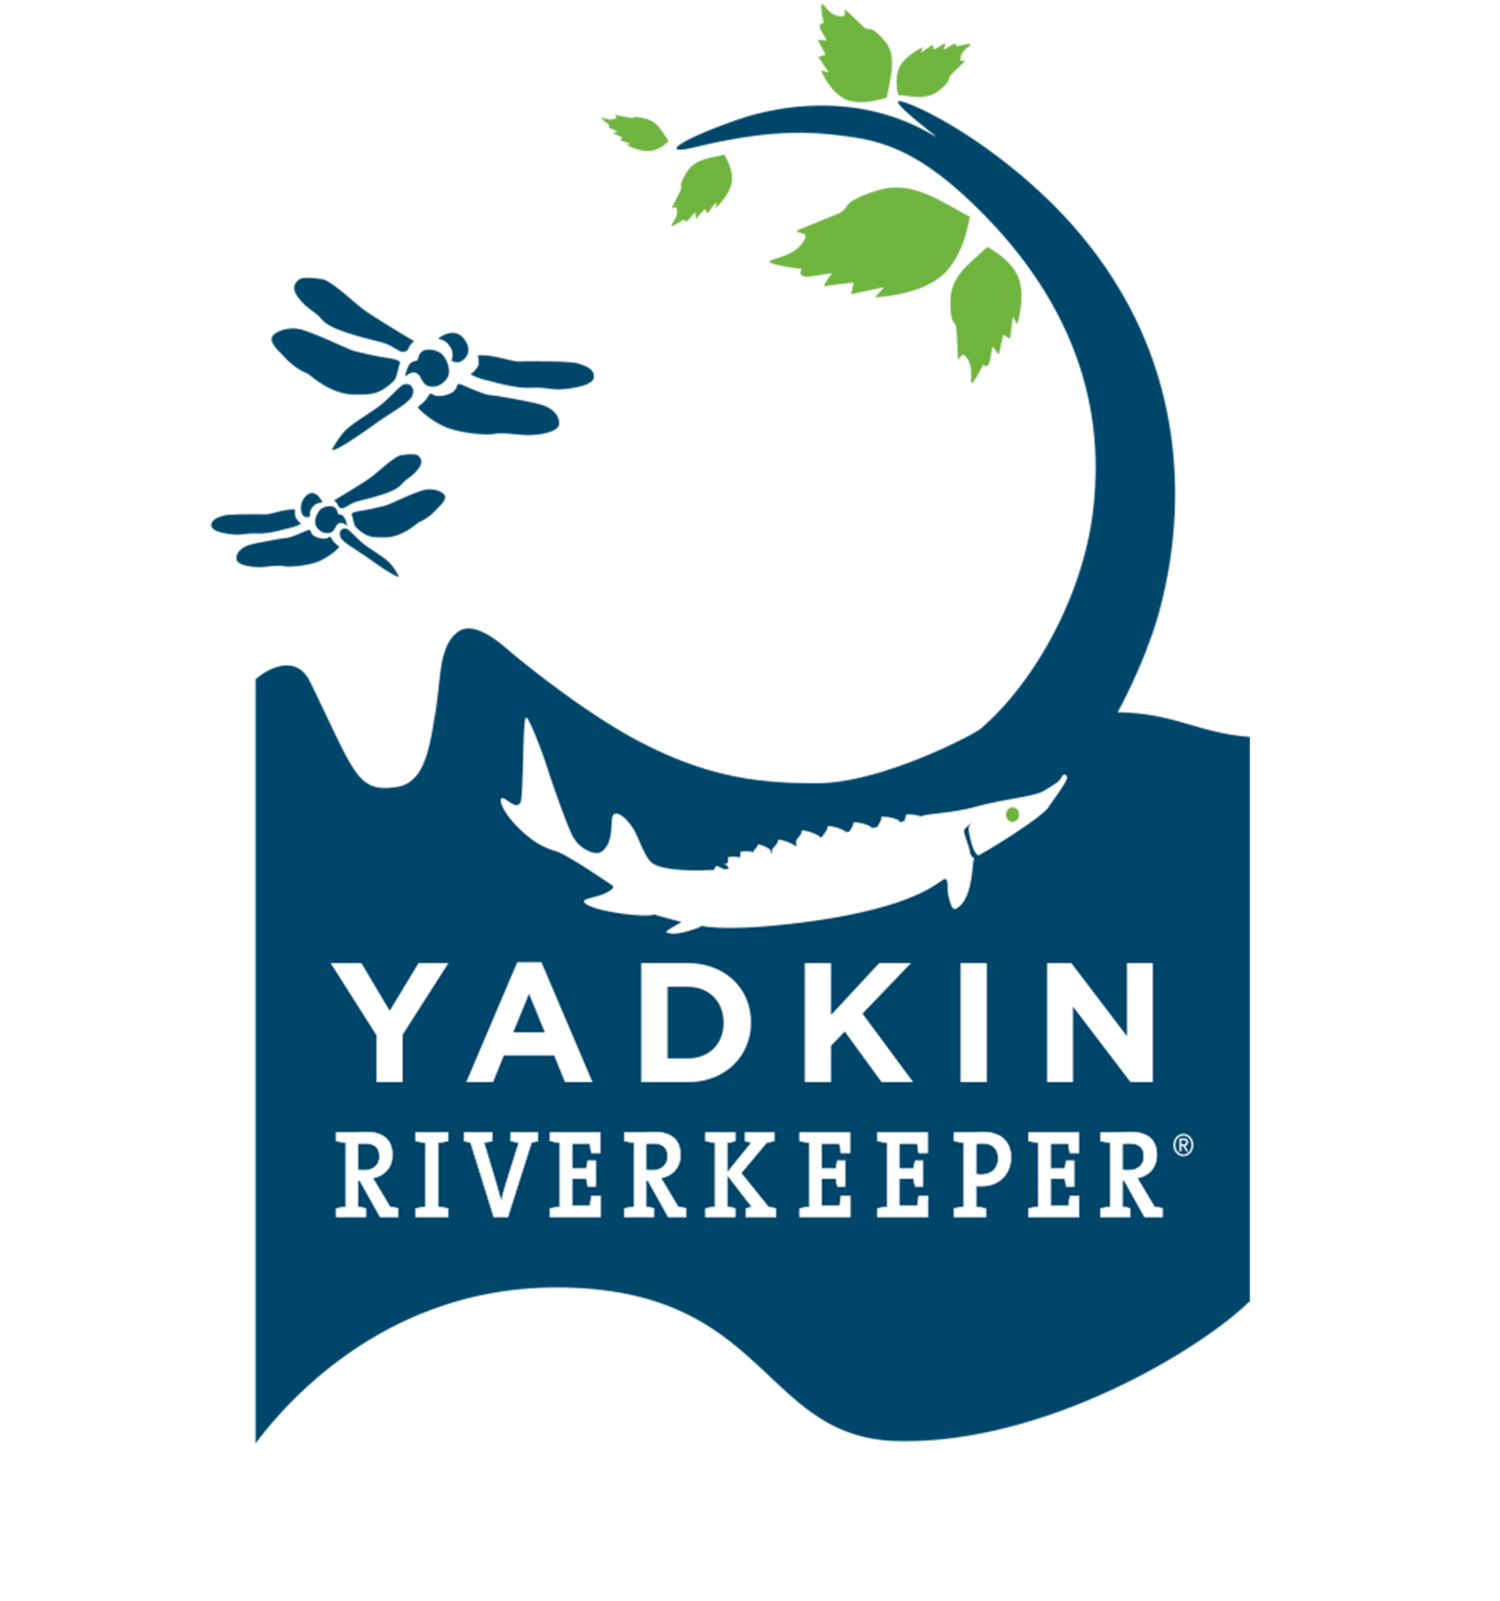 Yadkin Riverkeeper